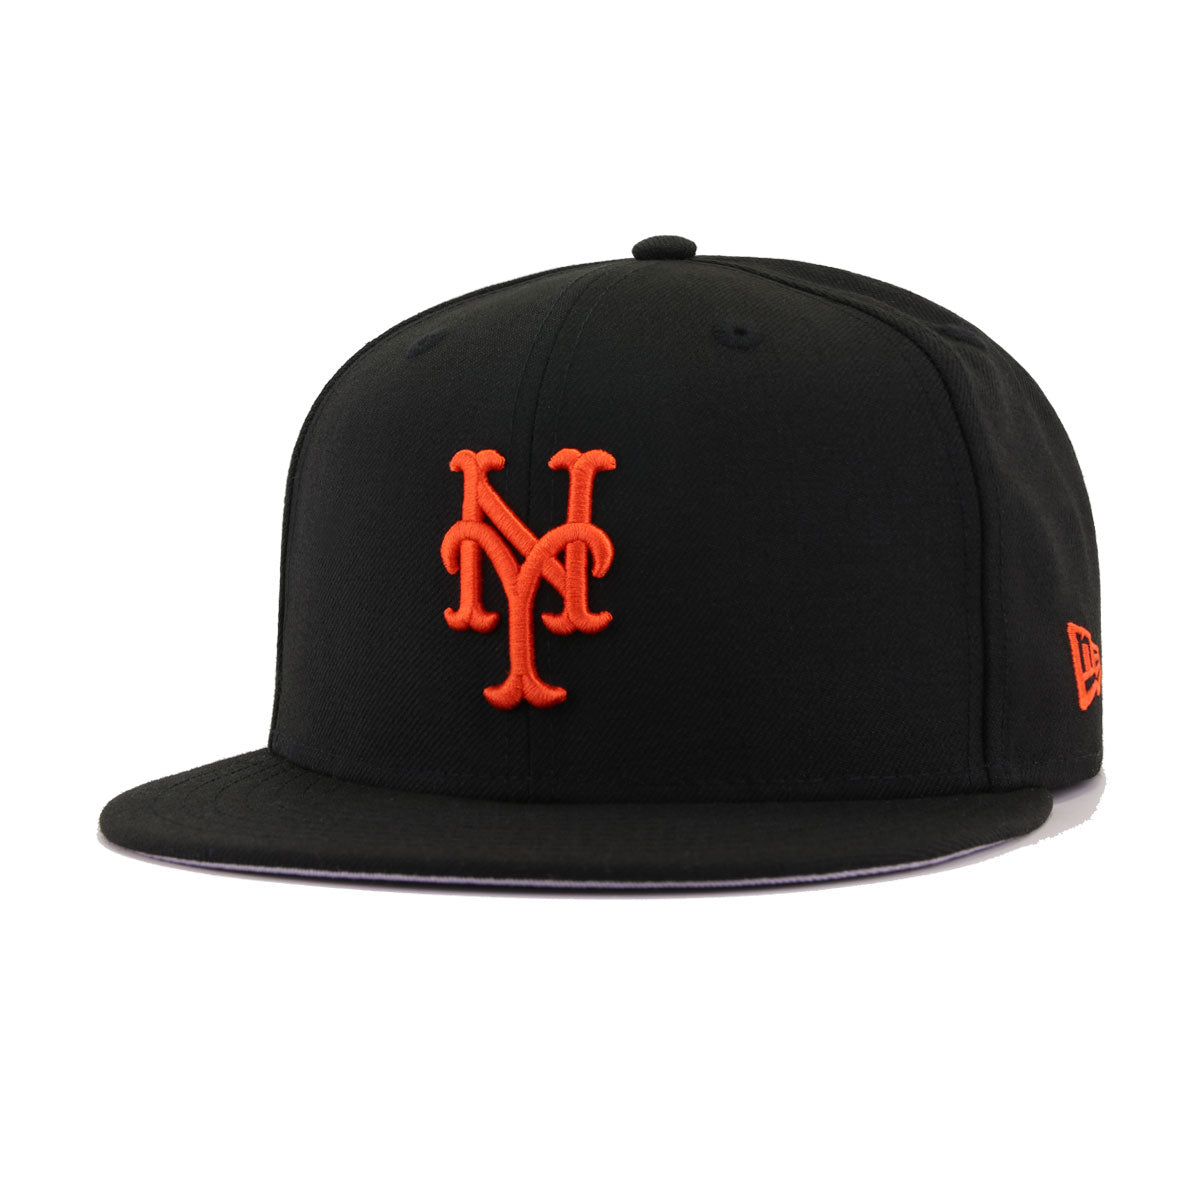 New York Baseball Hat Black 1986 World Series New Era 59FIFTY Fitted Black / Orangeade / 8